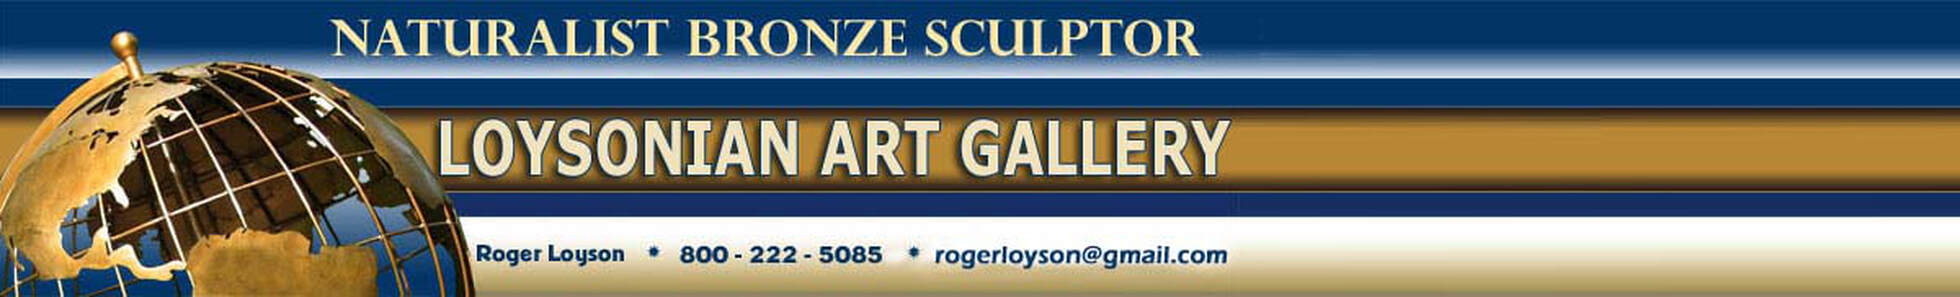 Bronze World Globe - Naturalist Bronze Sculptor - Roger Loyson